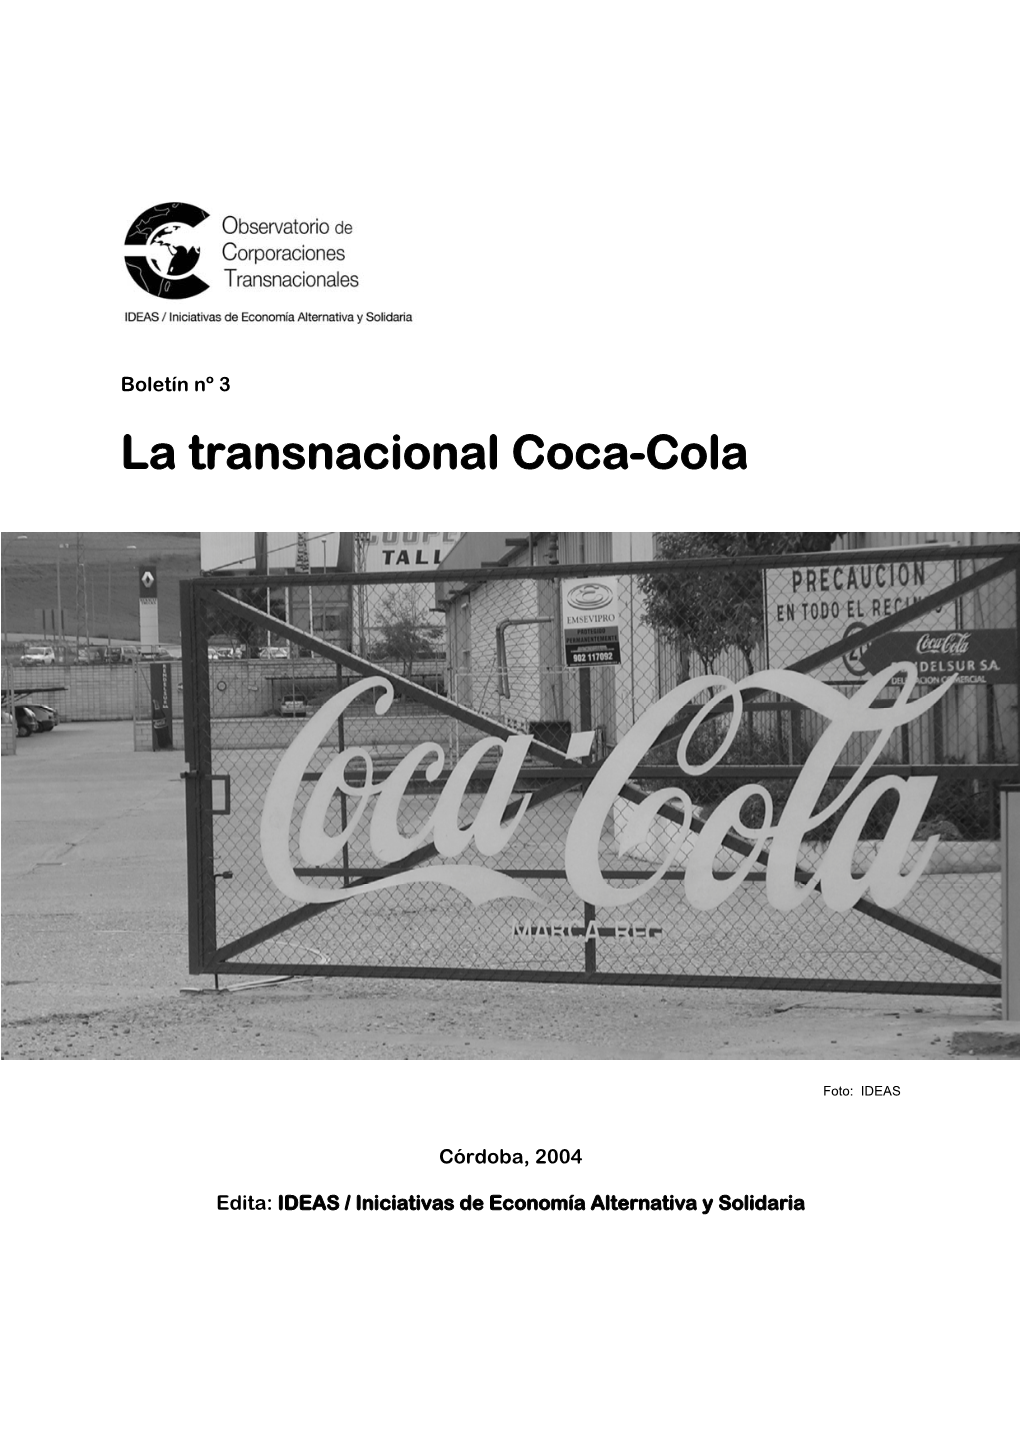 La Transnacional Coca-Cola